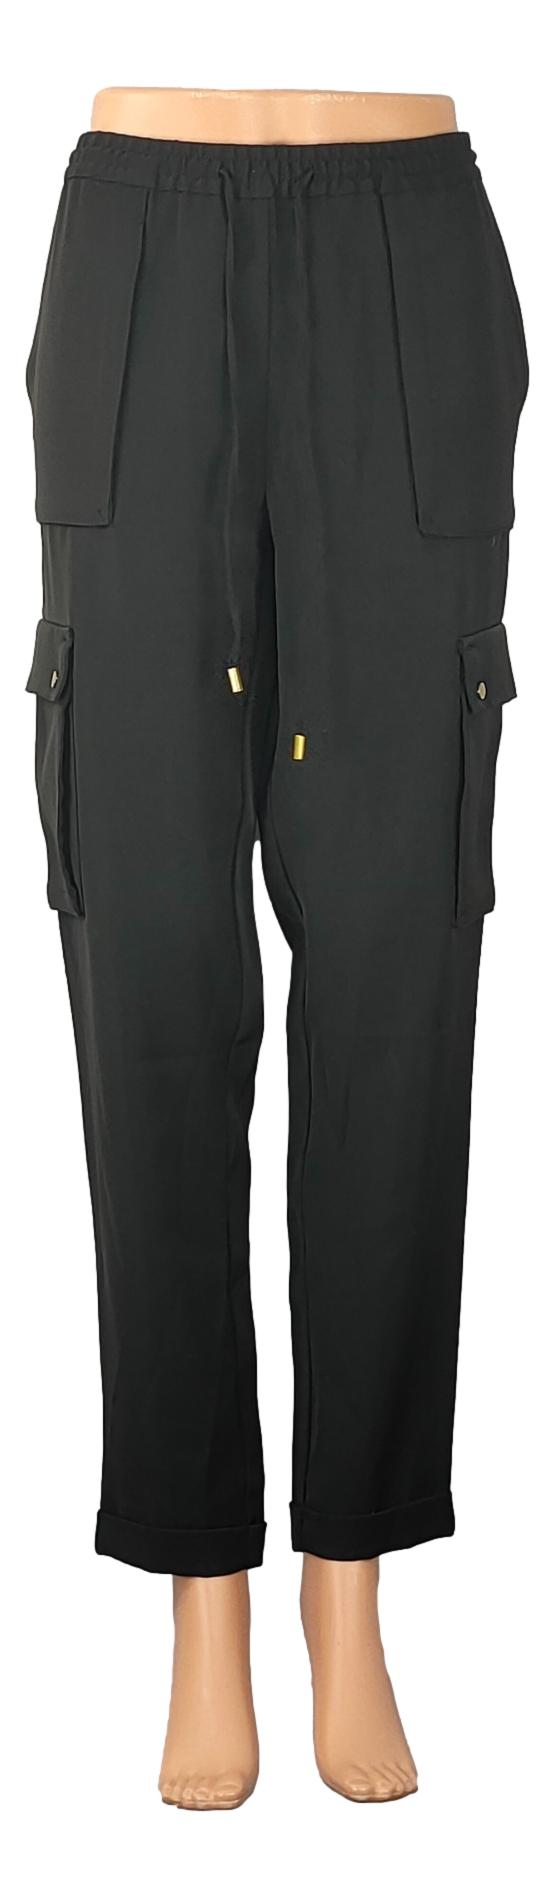 Pantalon H&M - Taille 38